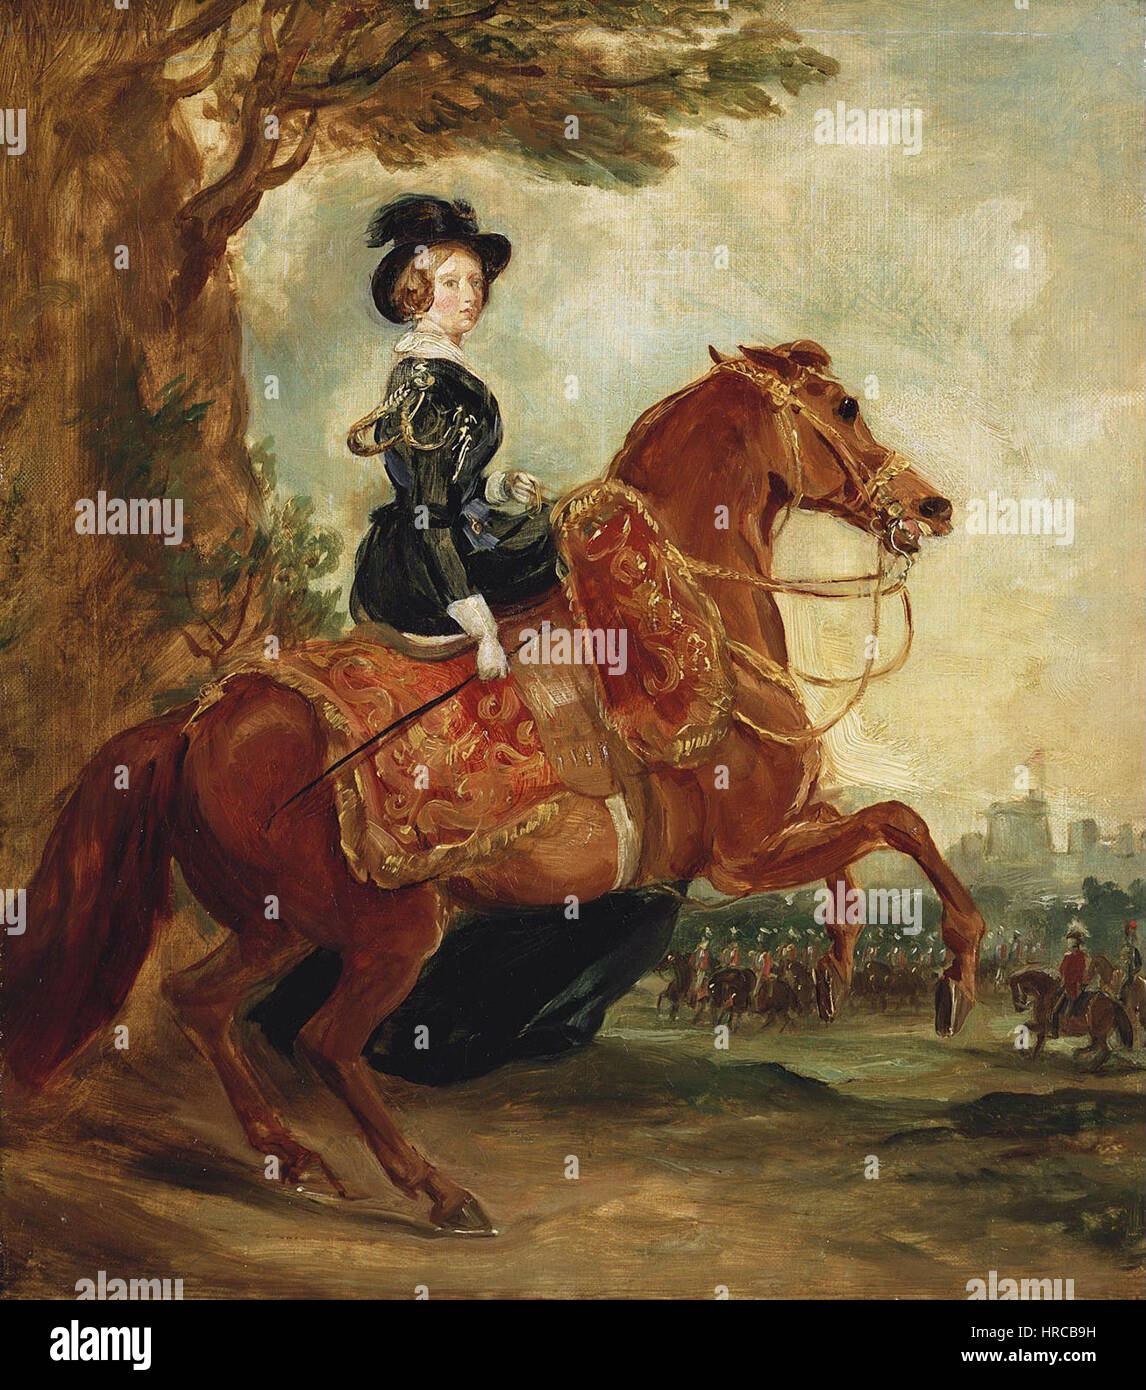 Queen Victoria on horseback - Grant 1845 Stock Photo